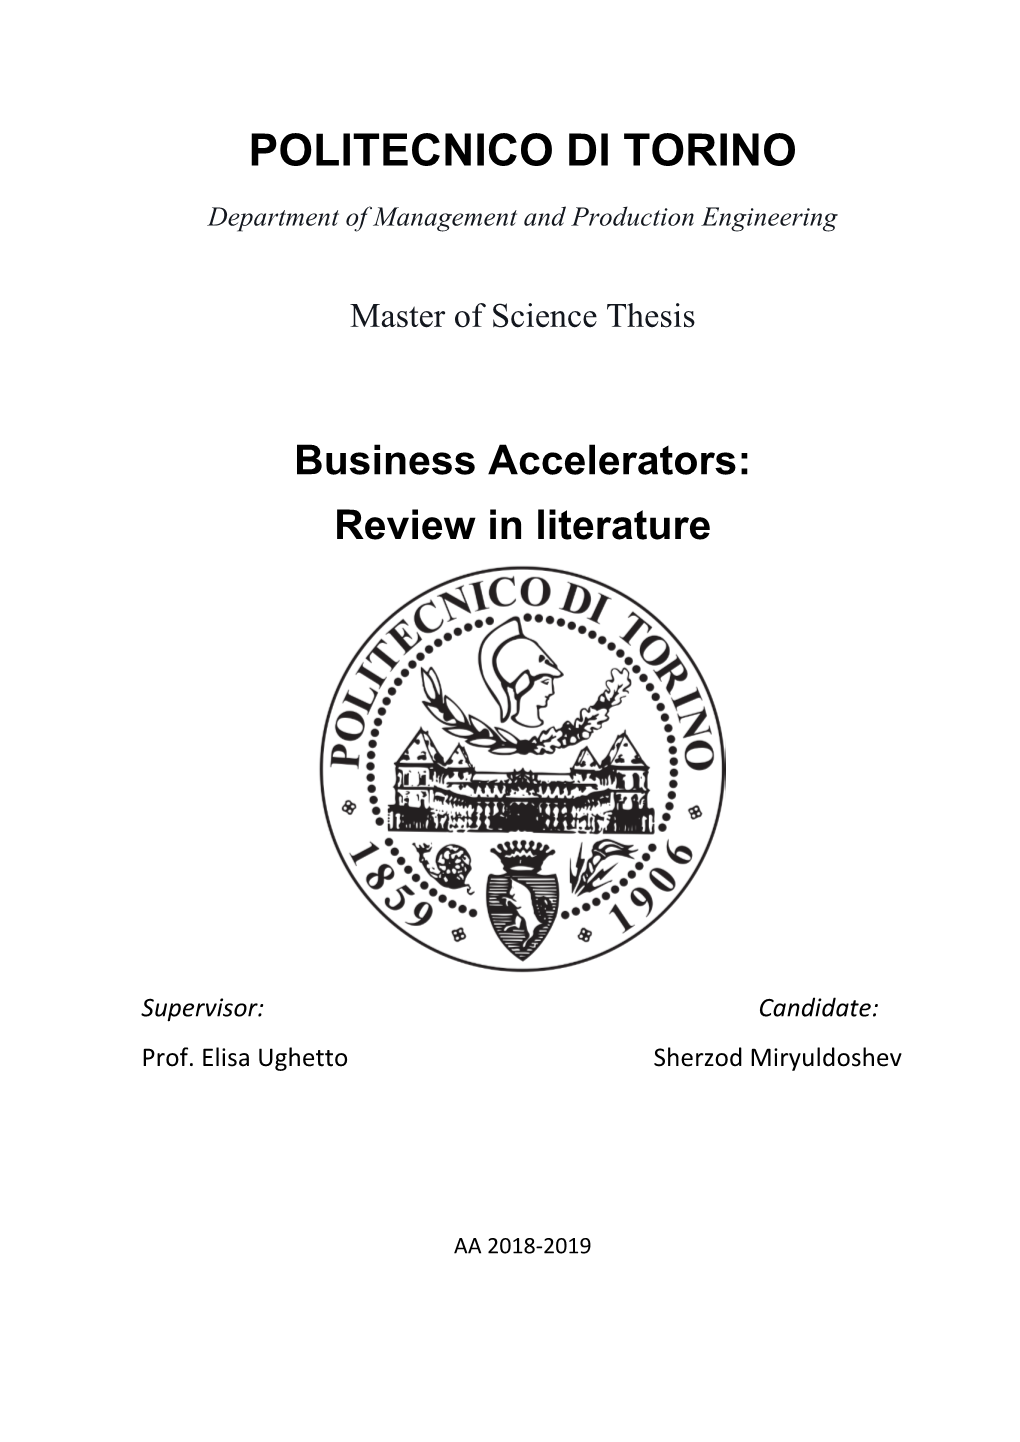 Business Accelerators: Review in Literature